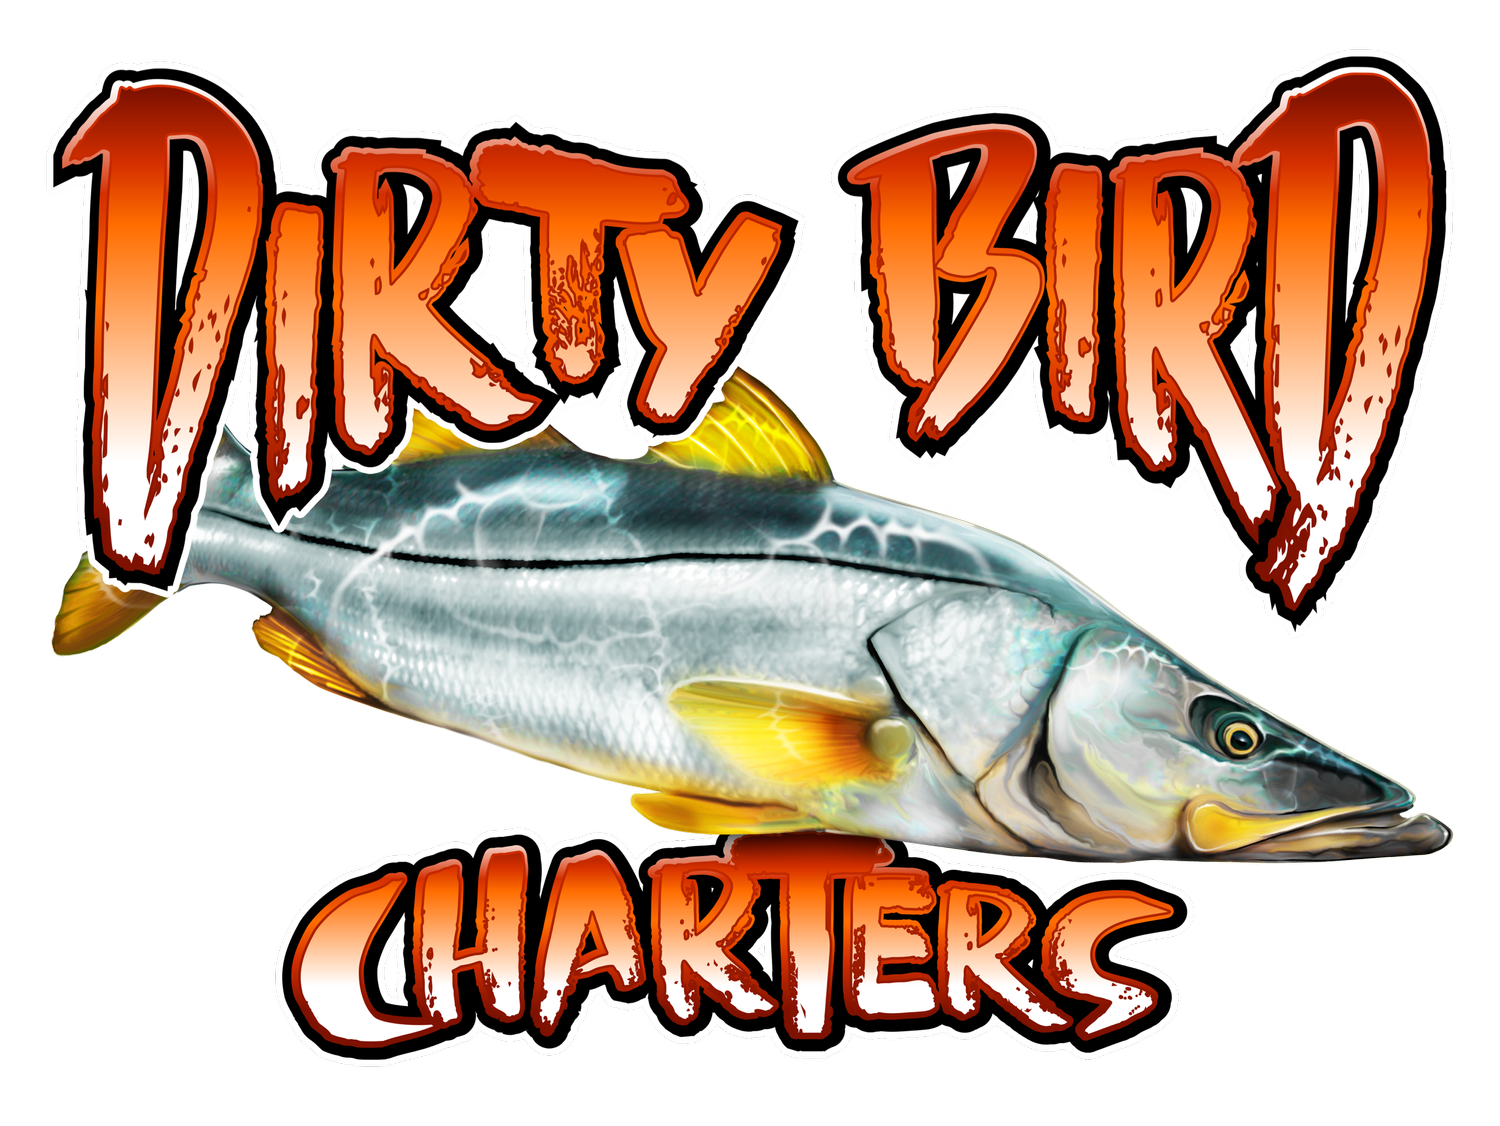 Dirty Bird Charters